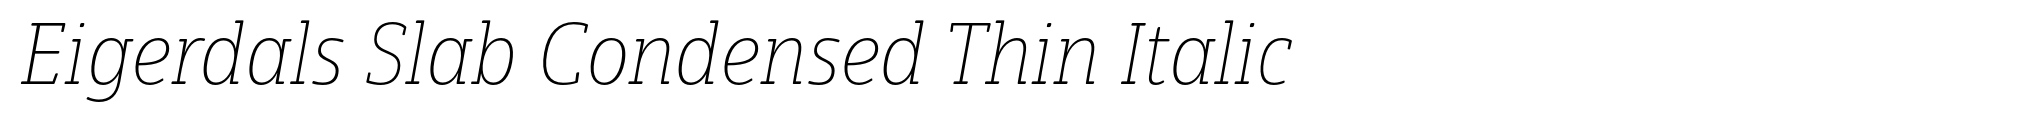 Eigerdals Slab Condensed Thin Italic image